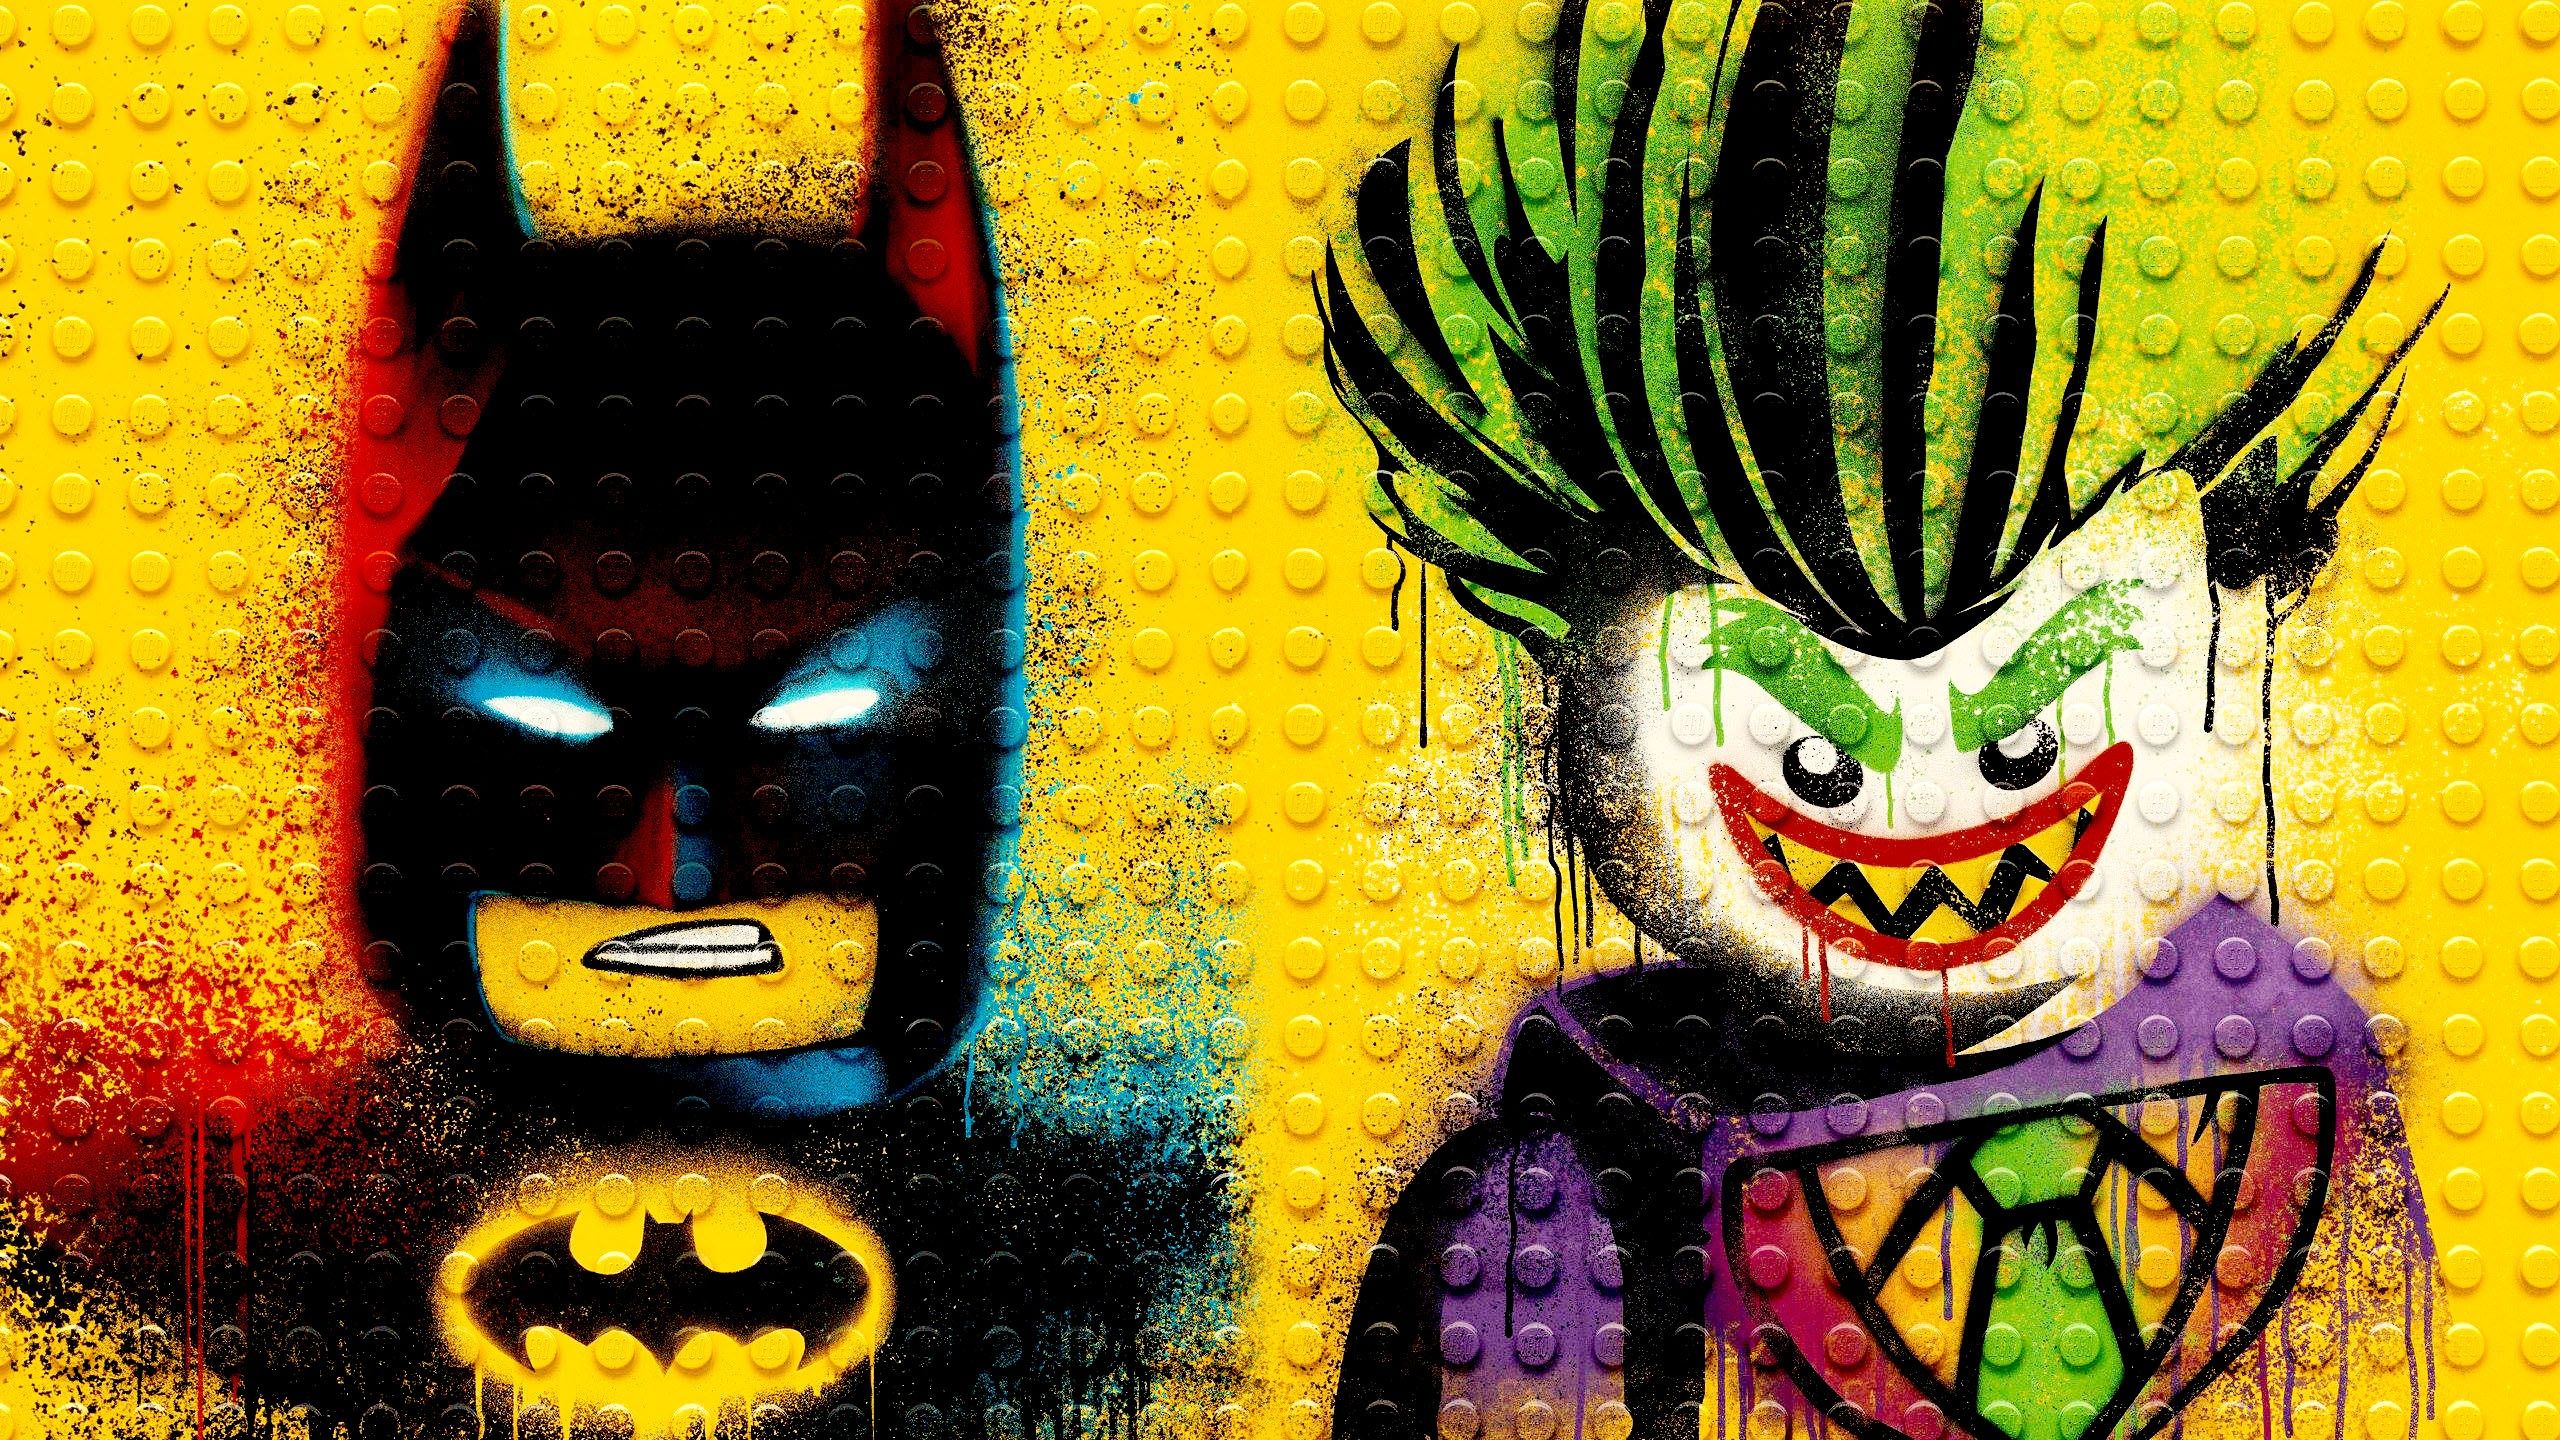 LEGO Batman wallpaper by HealedRanger656  Download on ZEDGE  cd3e